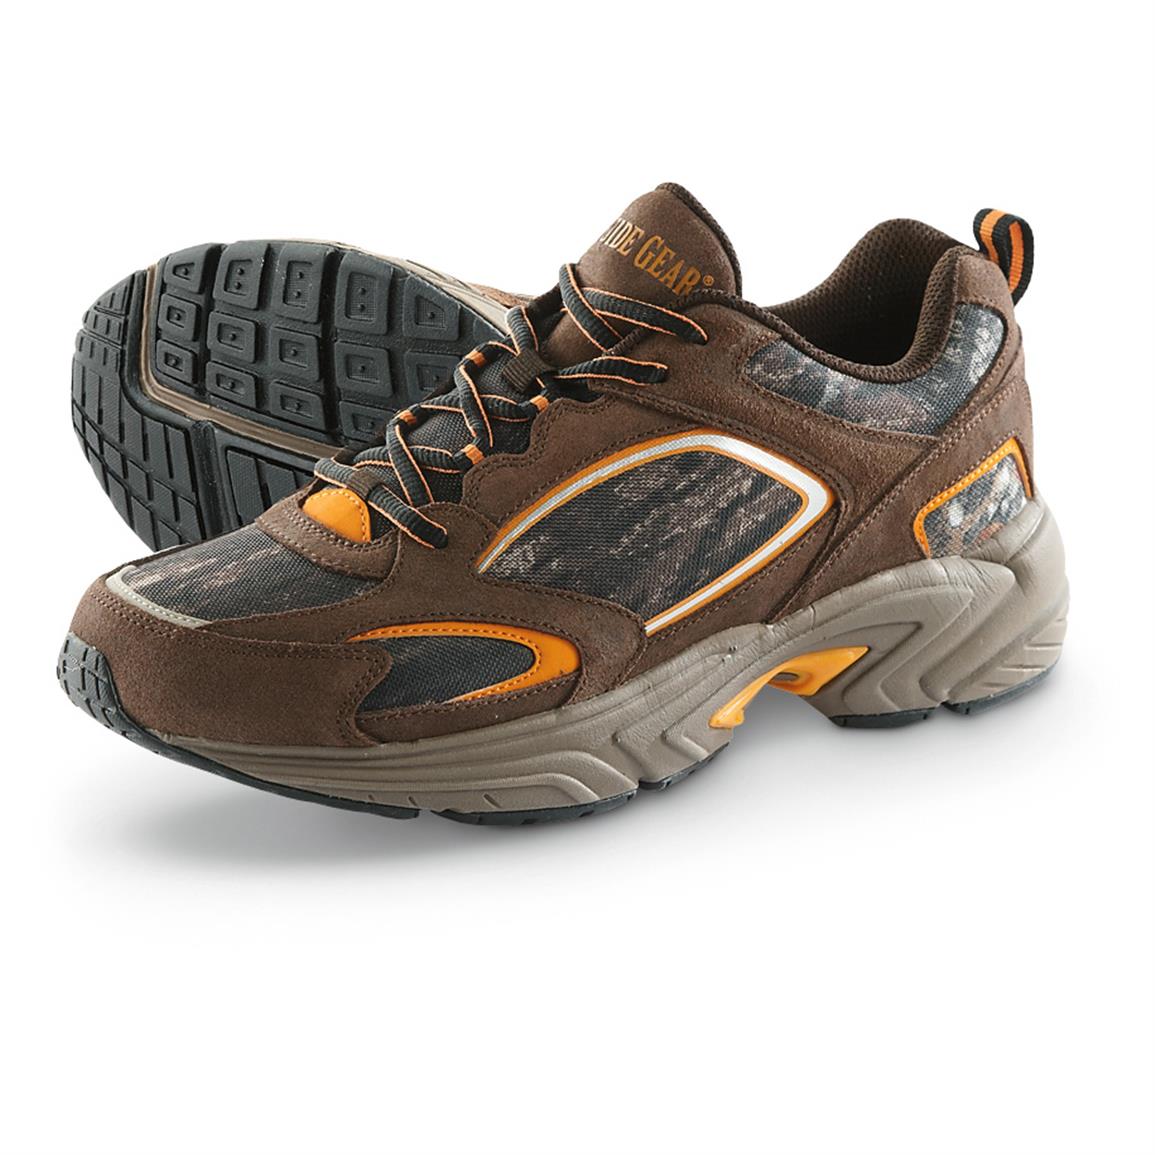 Guide Gear Lace up Camo Walking  Shoes  587917 Running 